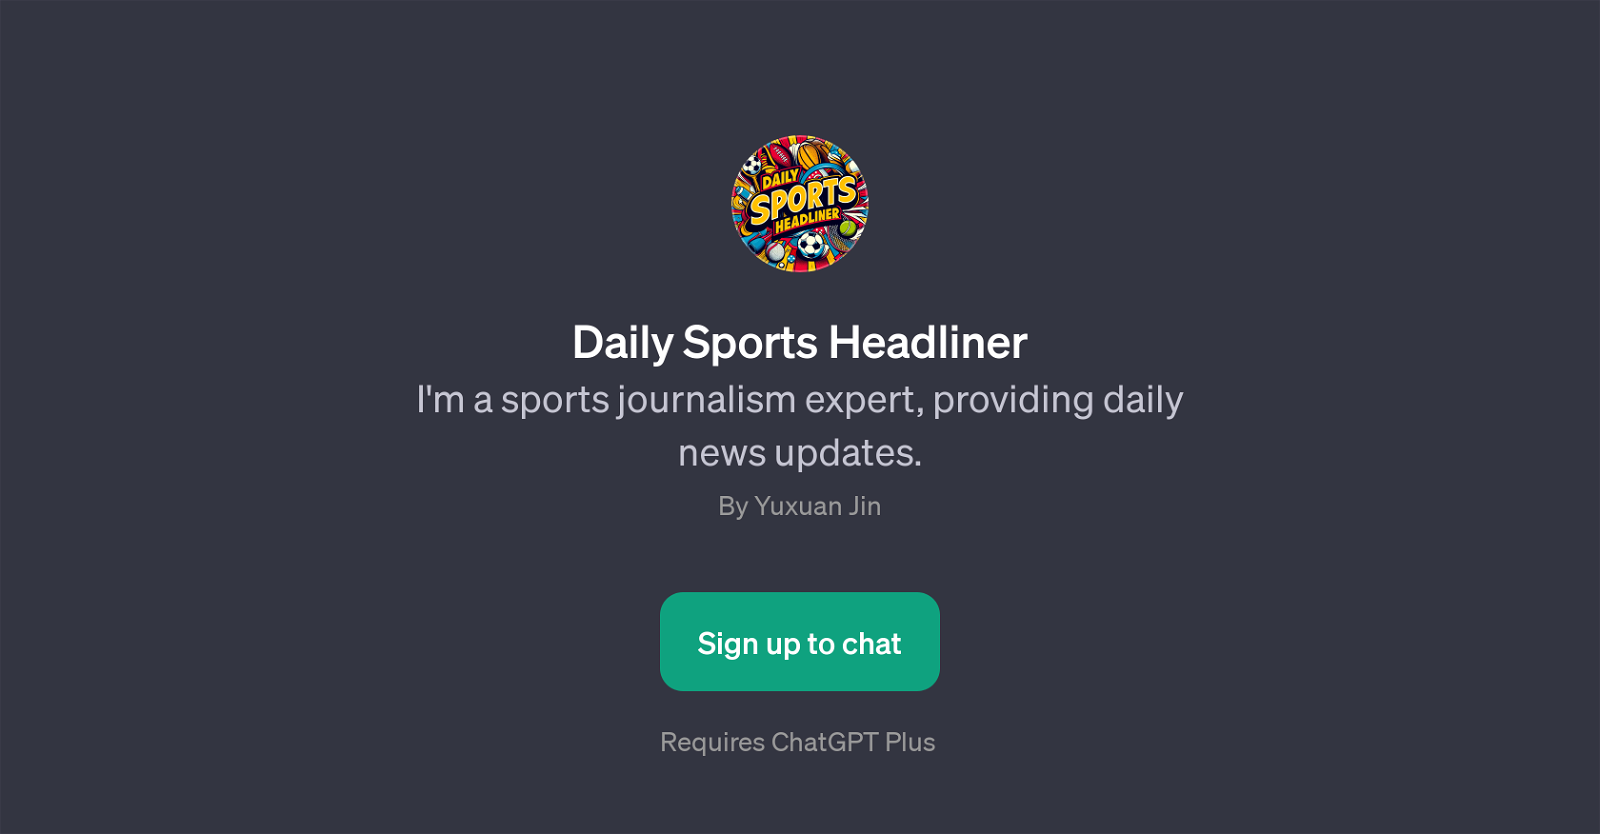 Daily Sports Headliner website